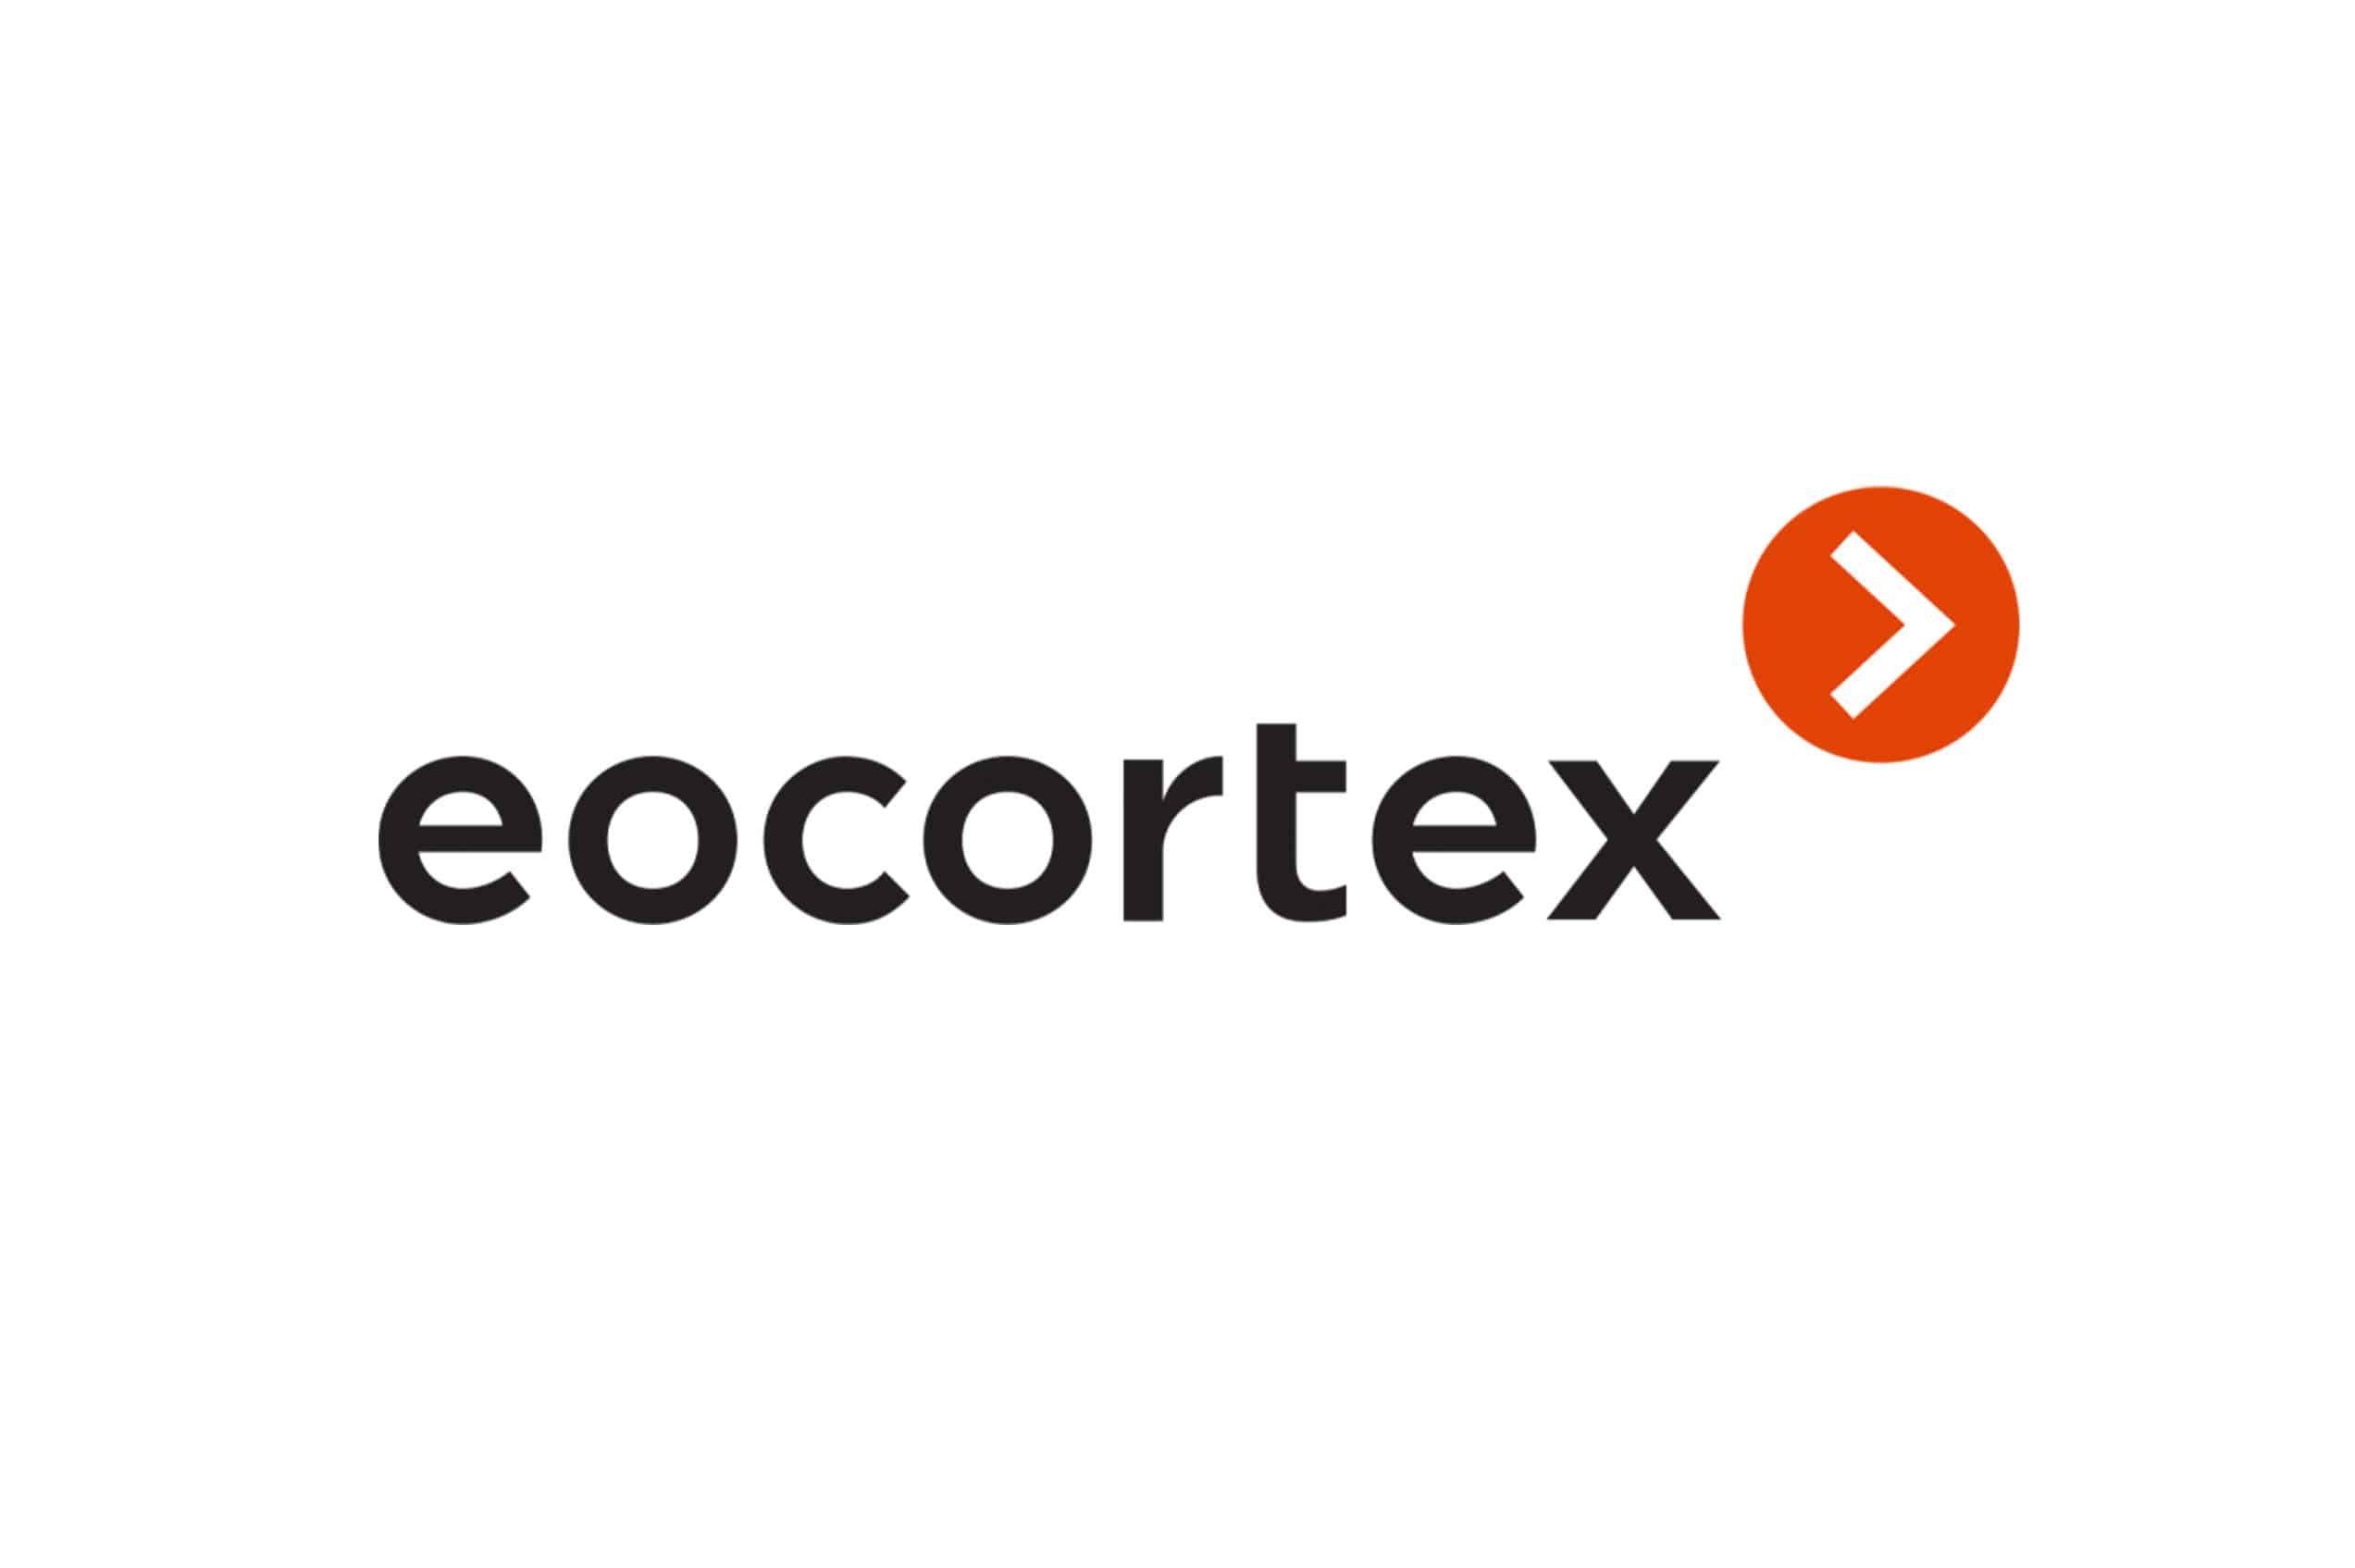 Eocortex logo